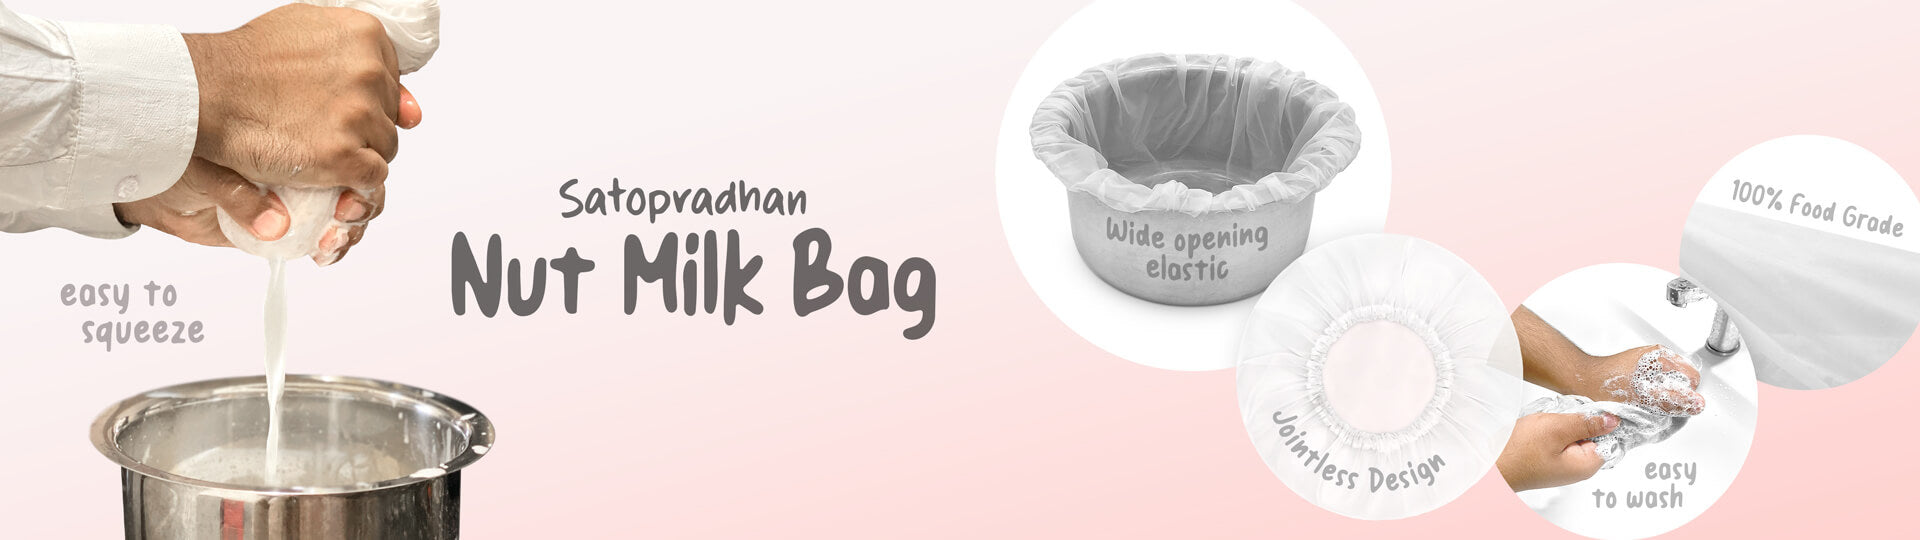 food-grade-nylon-cloth-nut-milk-bag - Satopradhan